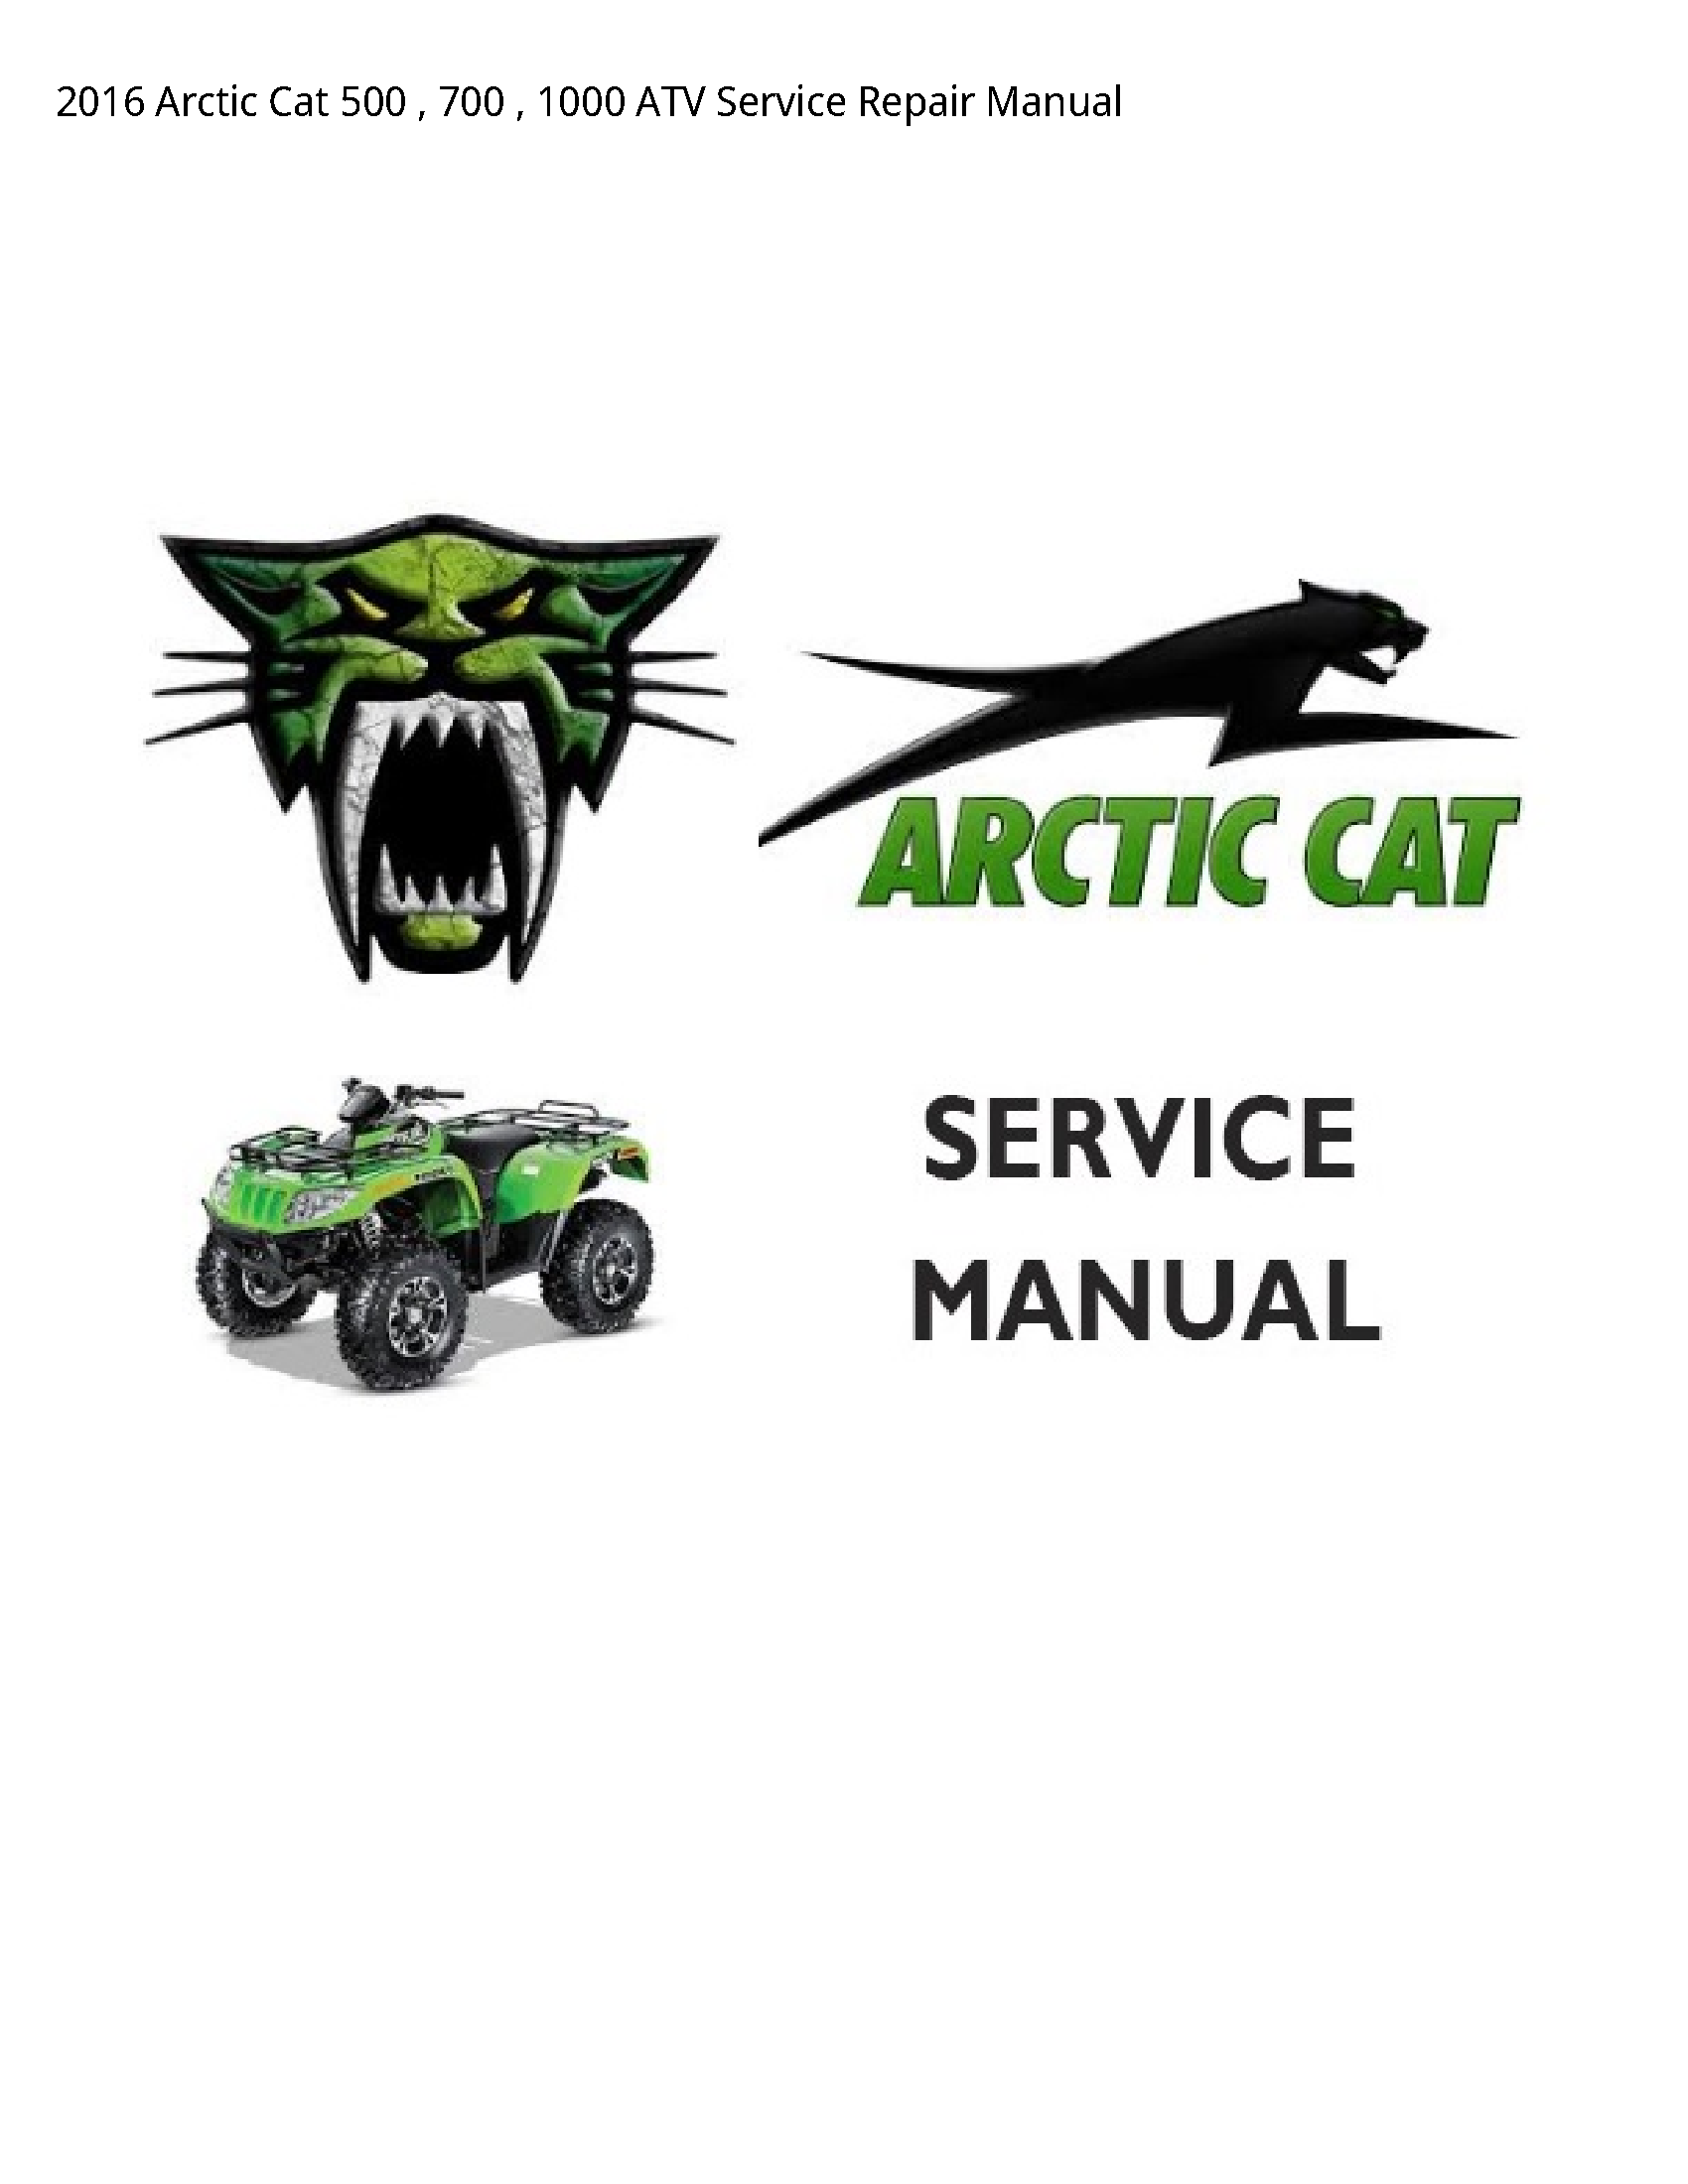 Arctic Cat 500 ATV manual